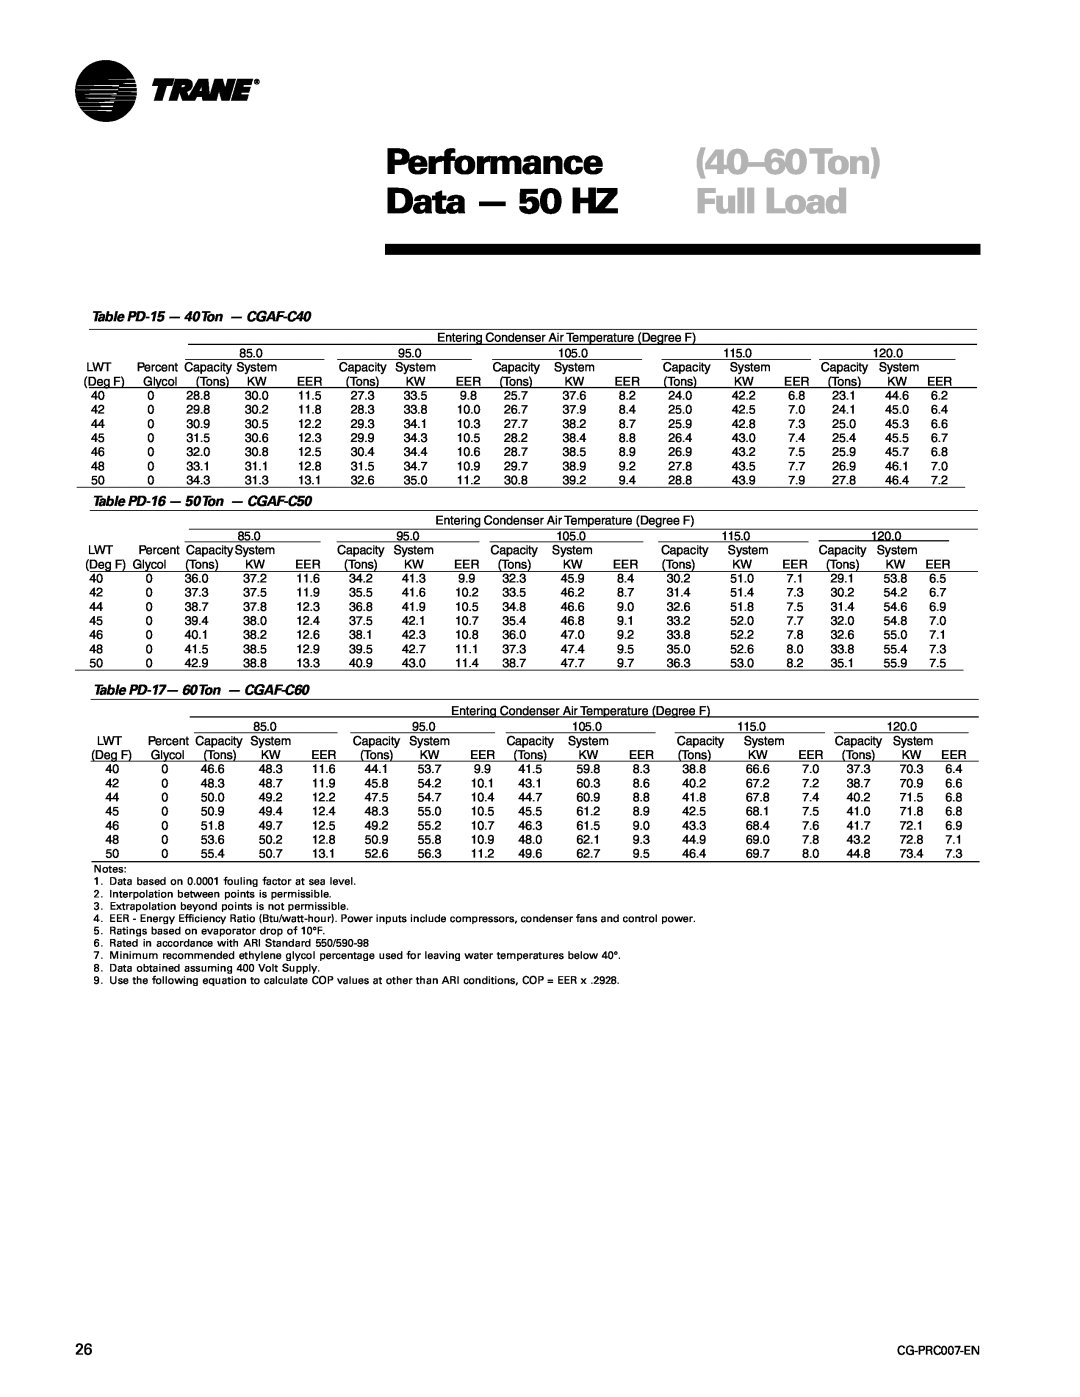 Trane CG-PRC007-EN manual 40-60Ton, Performance, Data - 50 HZ, Full Load, Table PD-15- 40Ton - CGAF-C40 